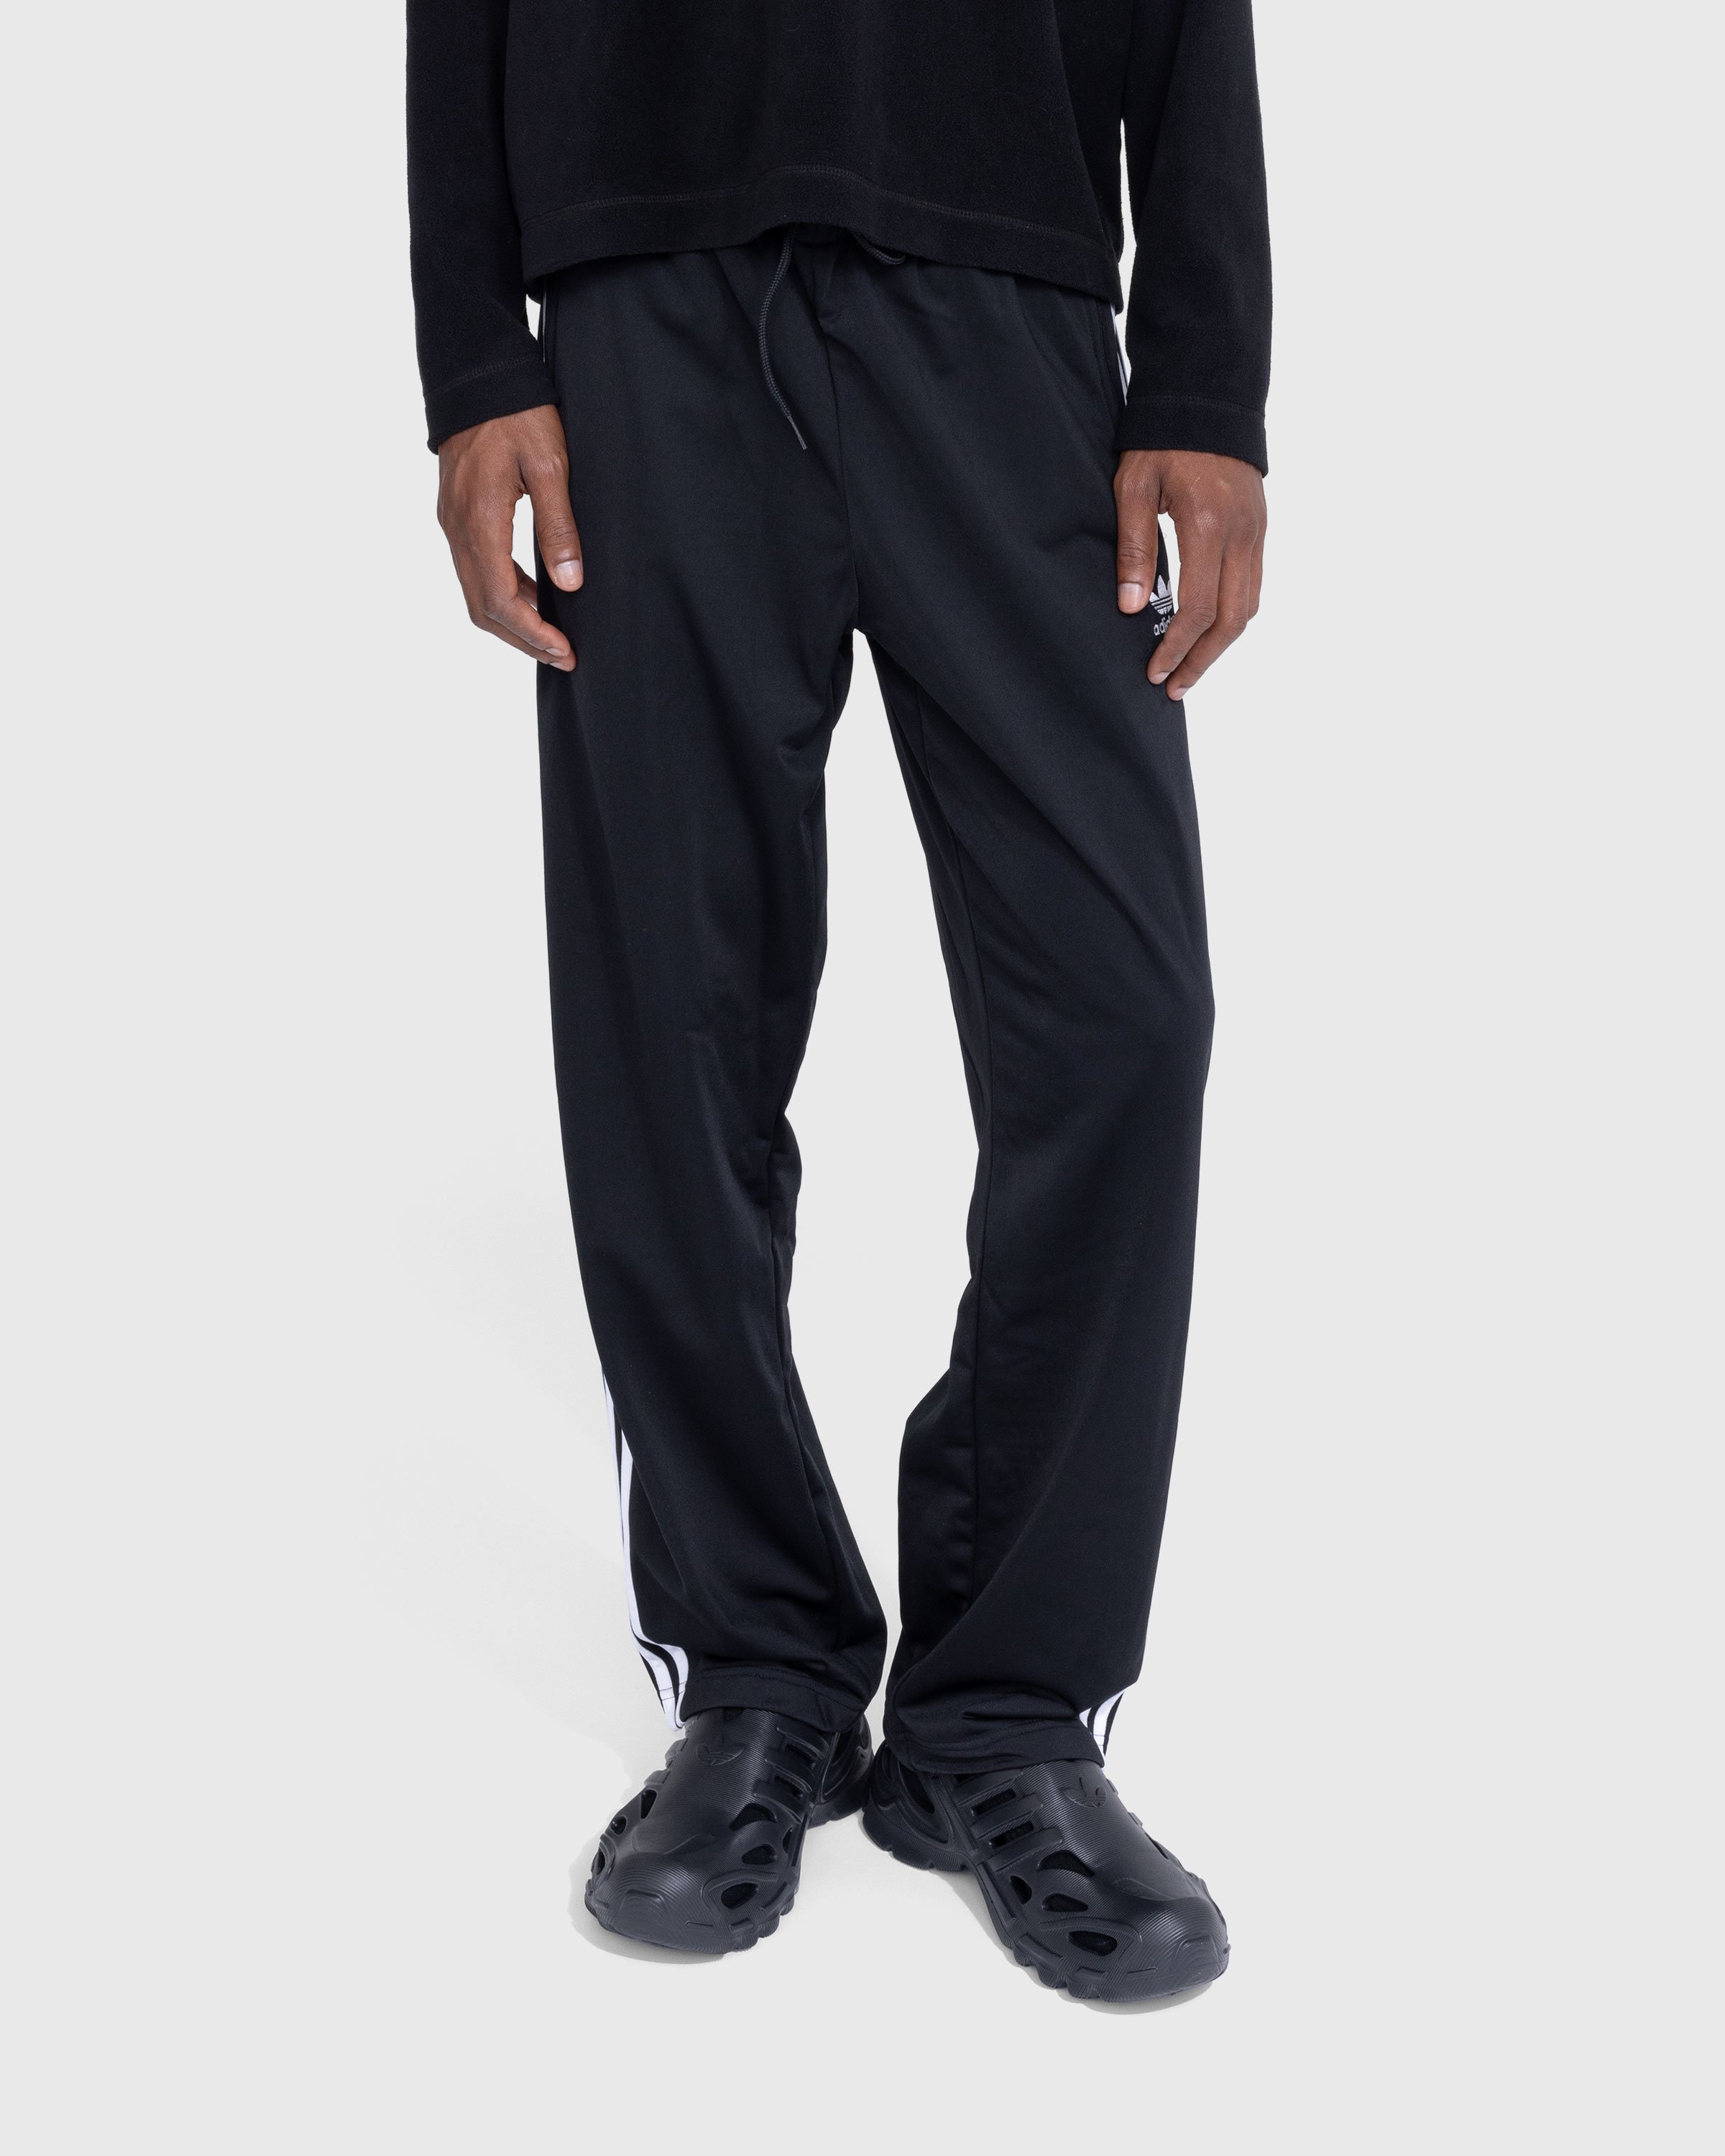 Adidas - Firebird Track Pants Black/White - Clothing - Black - Image 2